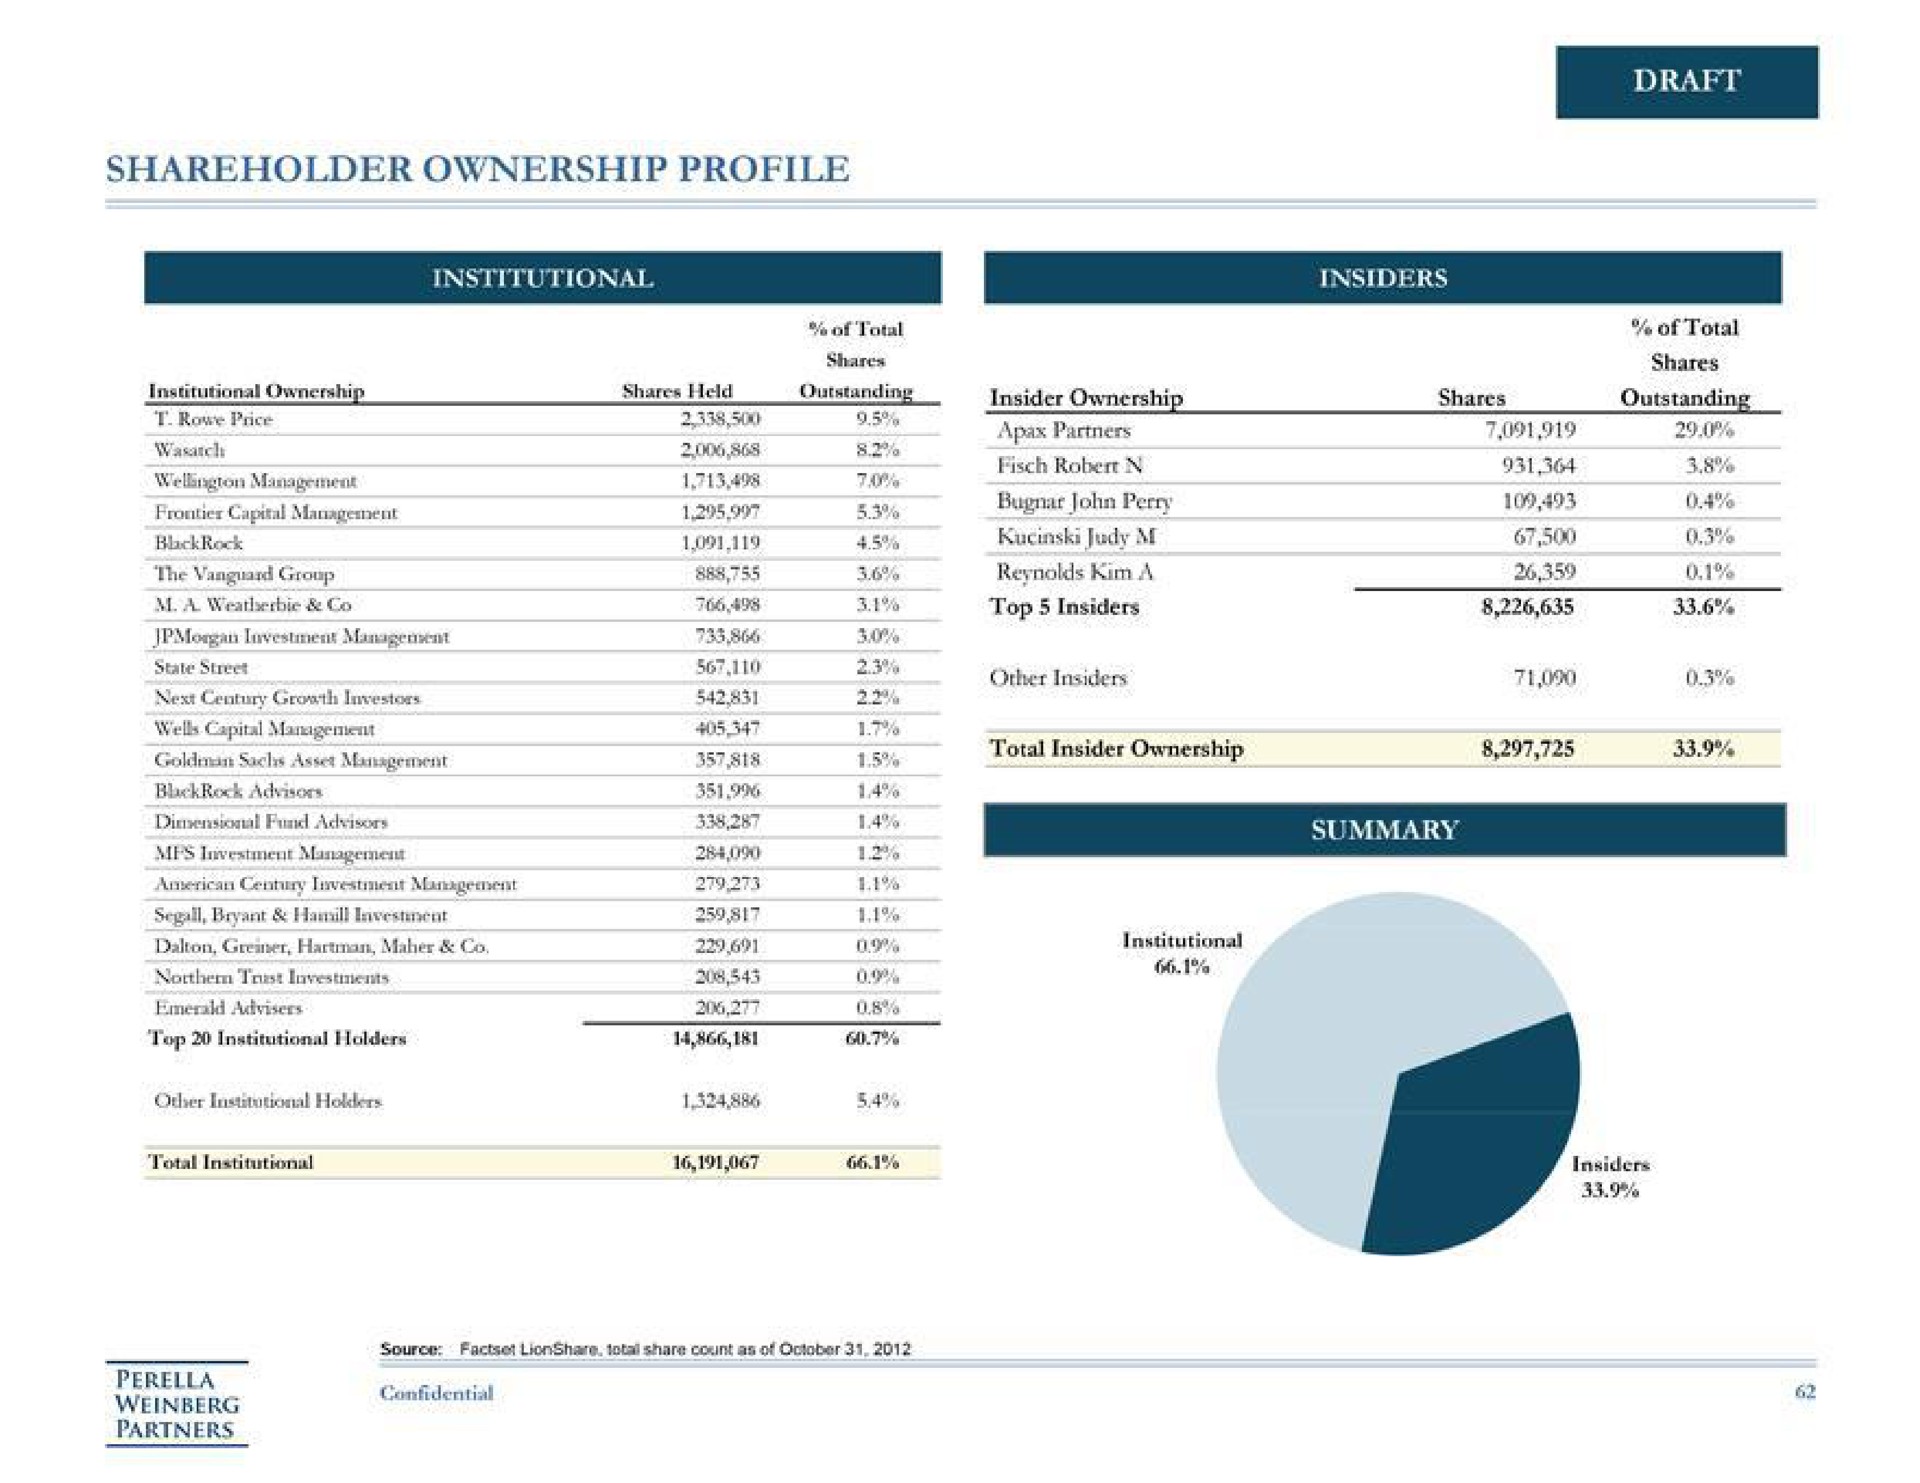 shareholder ownership profile draft | Perella Weinberg Partners